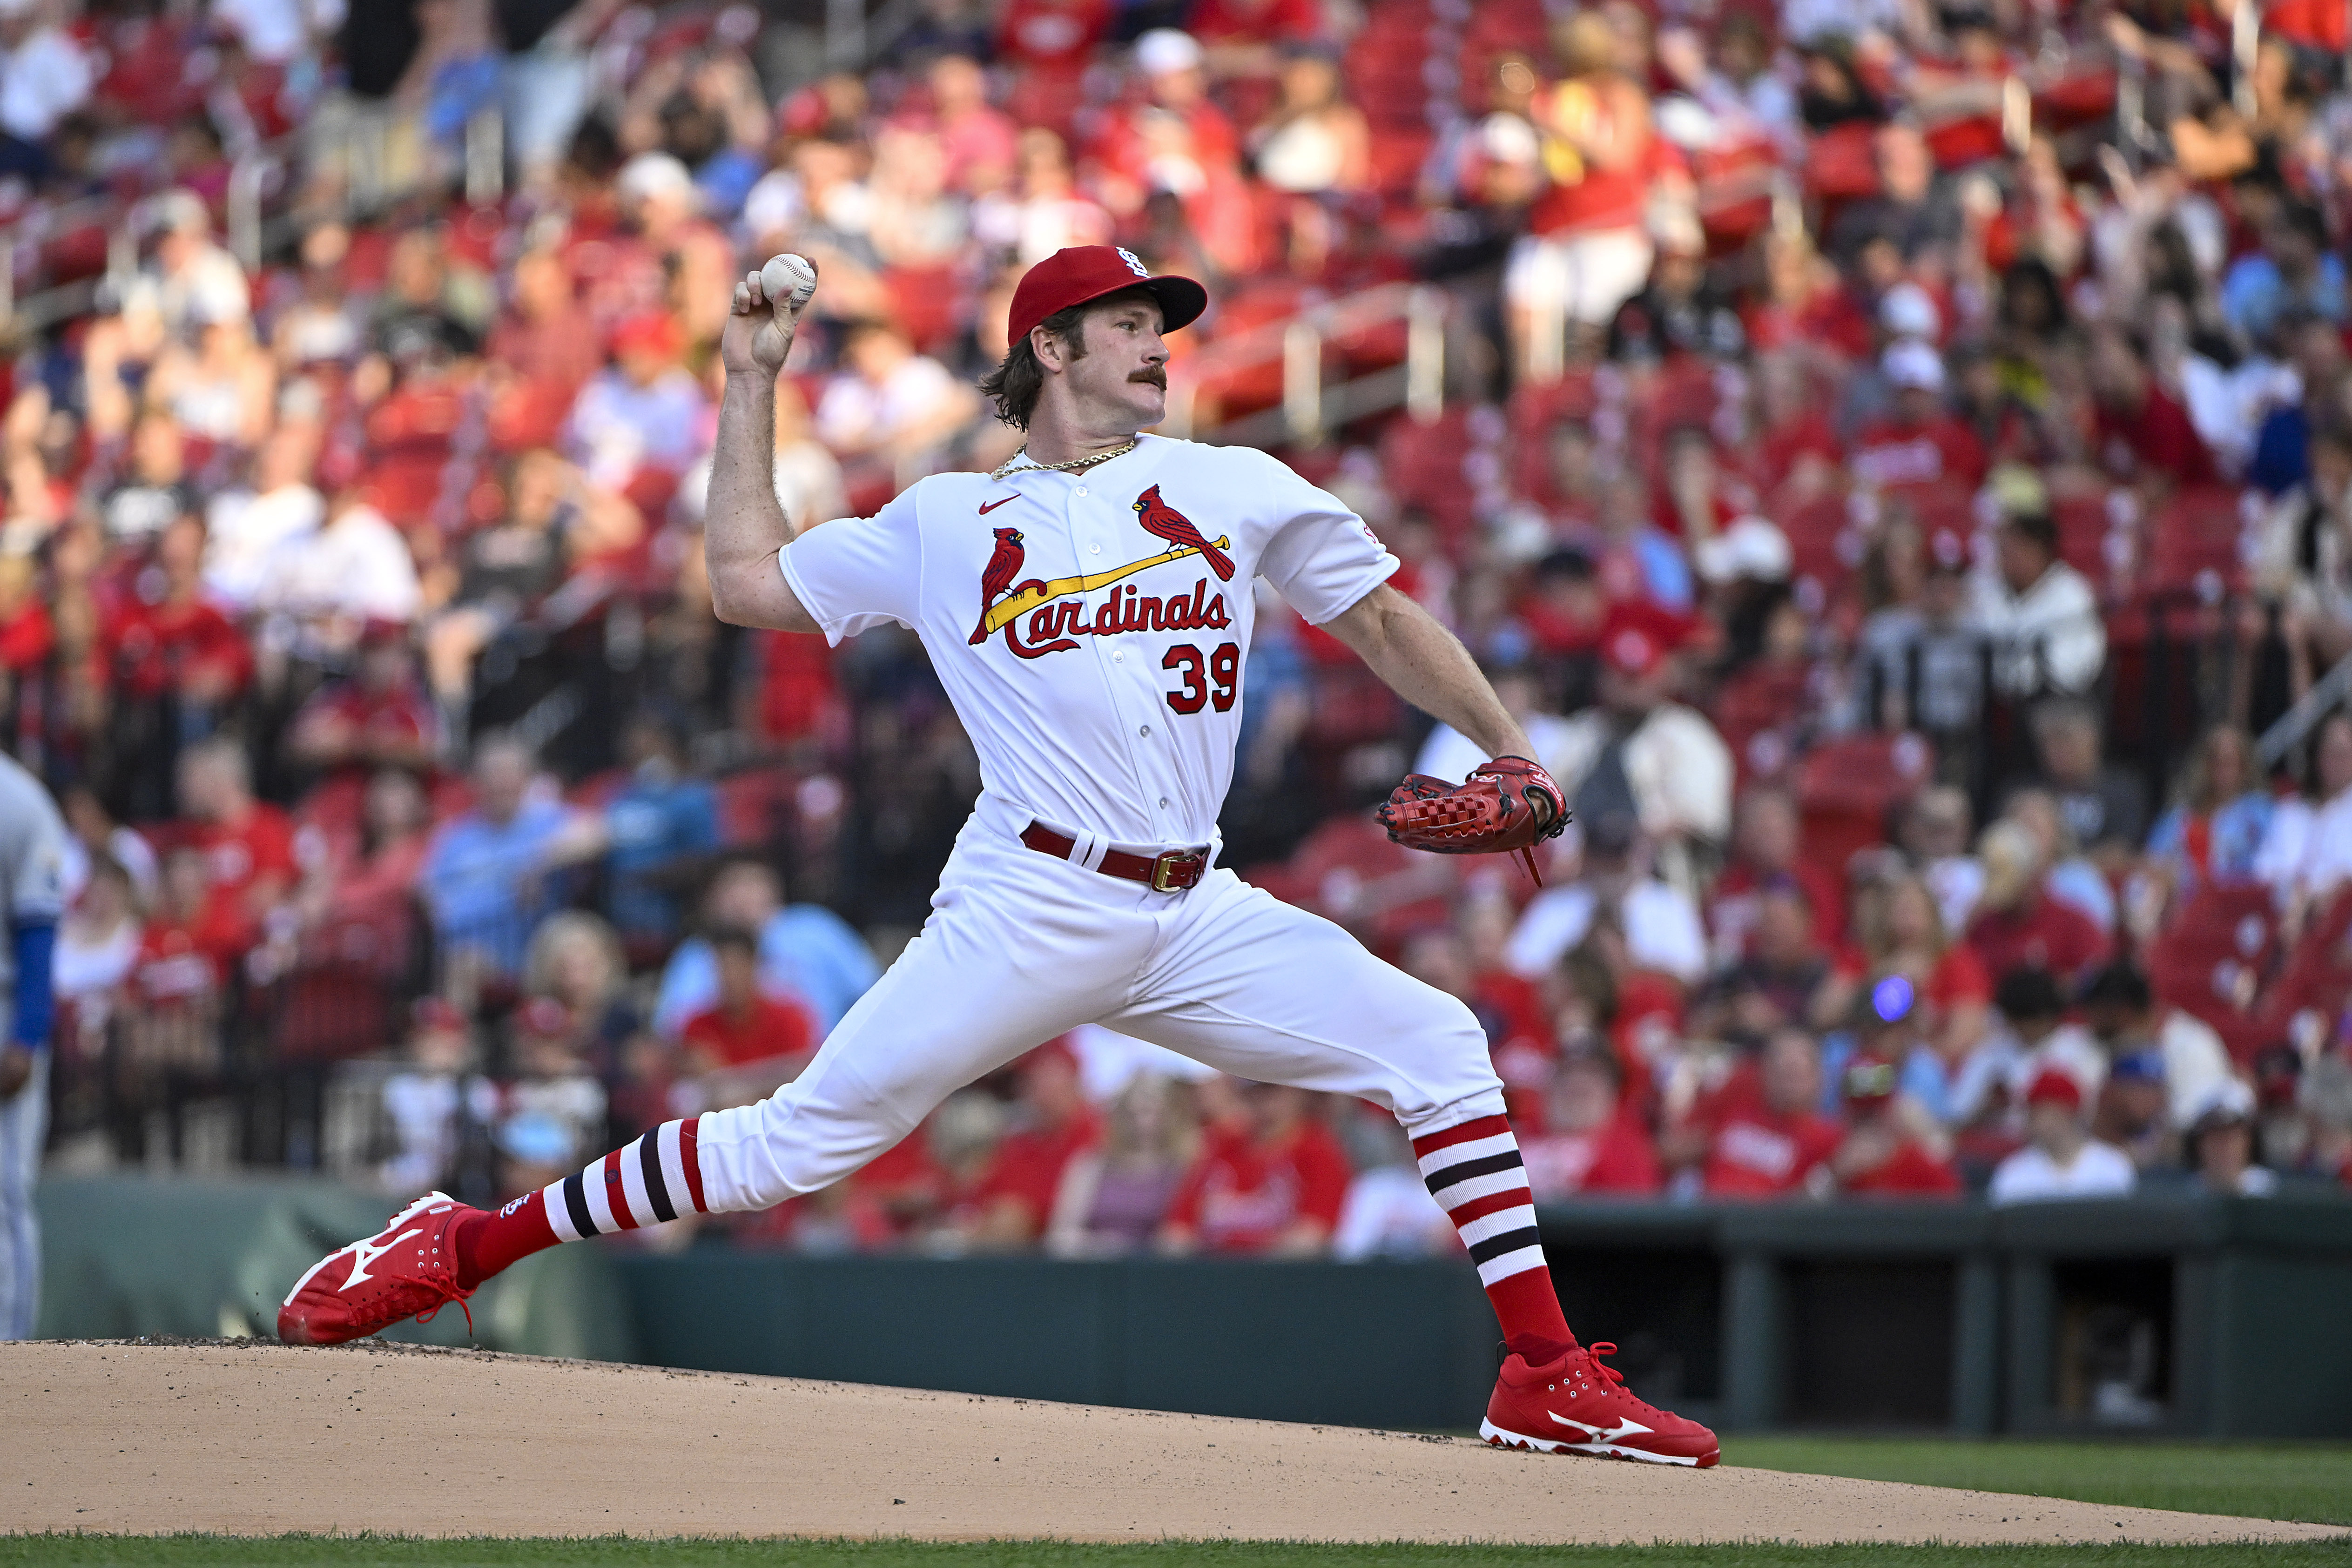 MLB -- For a few hours, Miles Mikolas kept St. Louis Cardinals